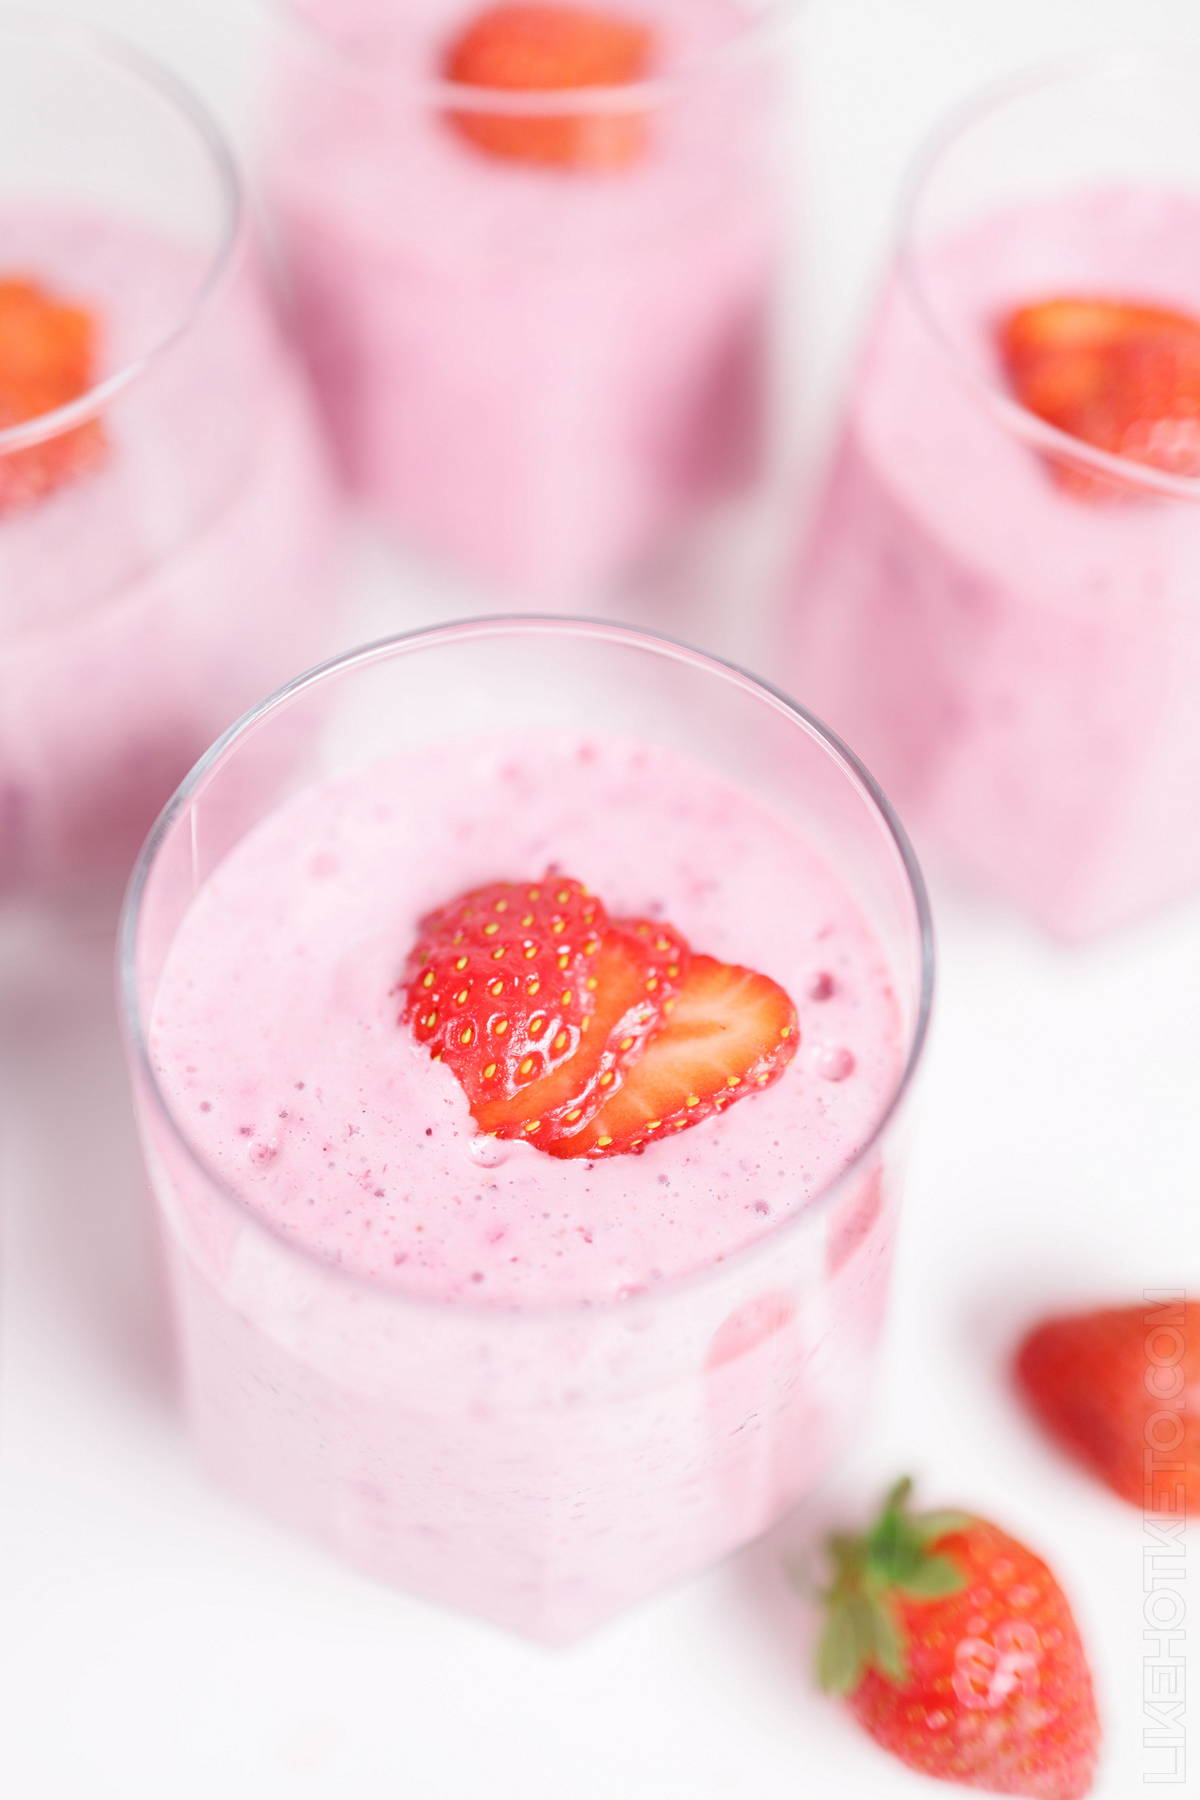 Sugar-free Greek yogurt and protein fluff topped with fresh strawberries.